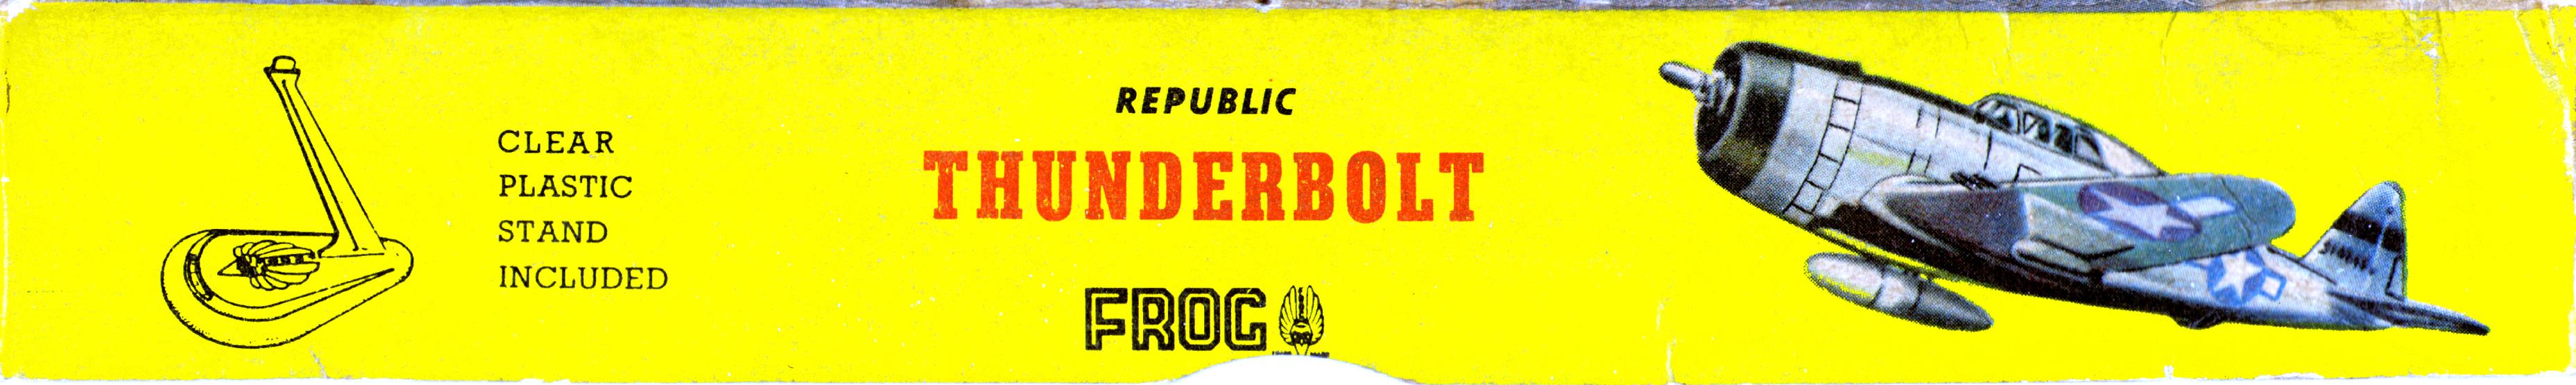 Коробка FROG 390P Republic Thunderbolt, IMA, 1959